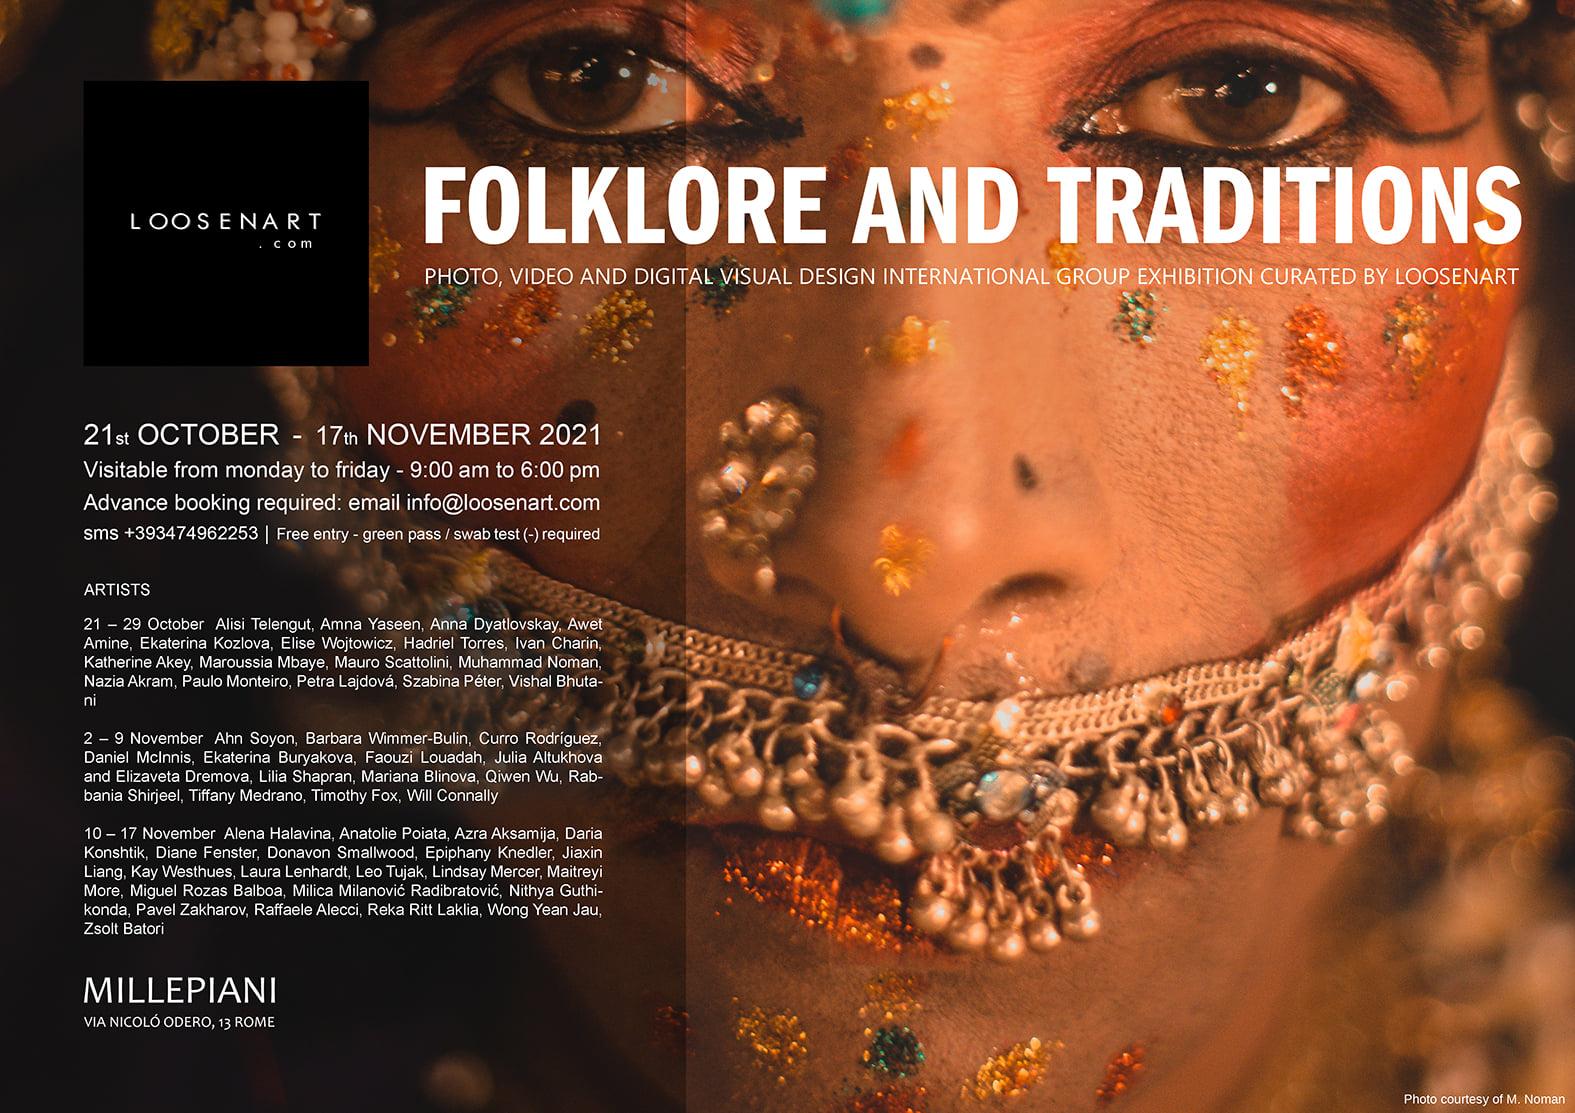 Art and Documentary Photography - Loading Loosen_art_folklor_traditions_exhibiton.jpeg